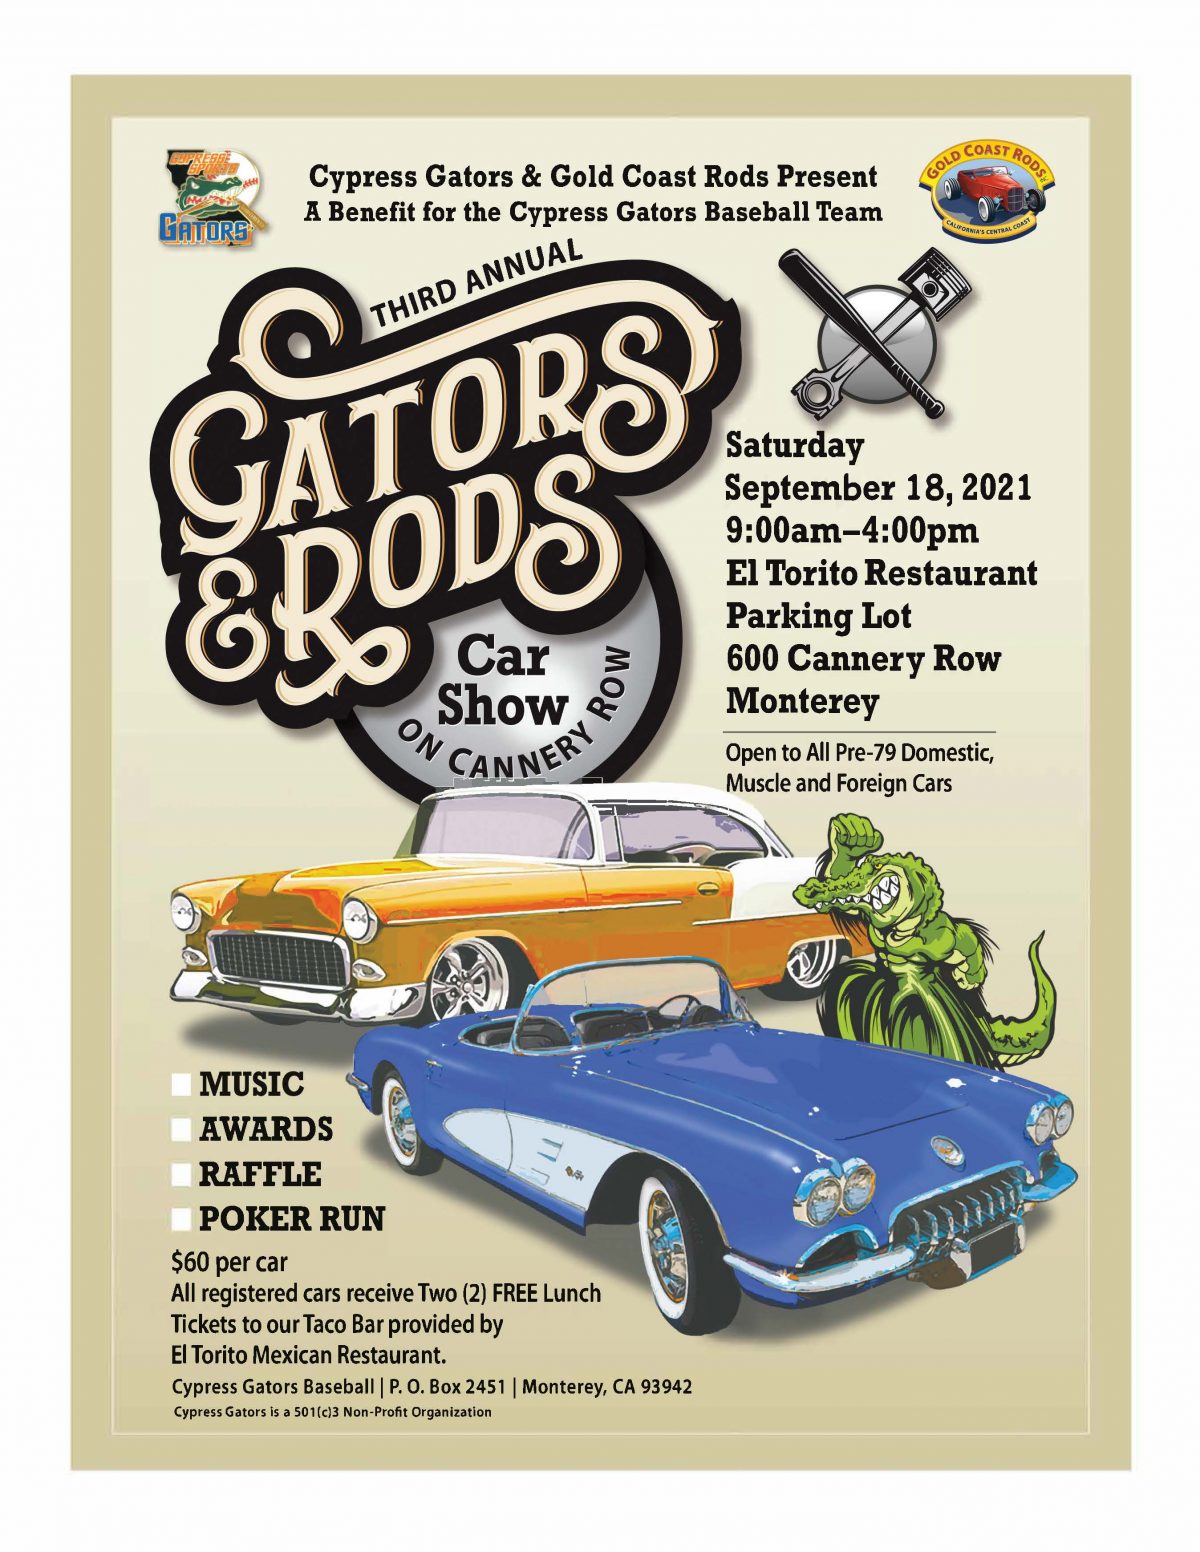 Gators & Rods Car Show